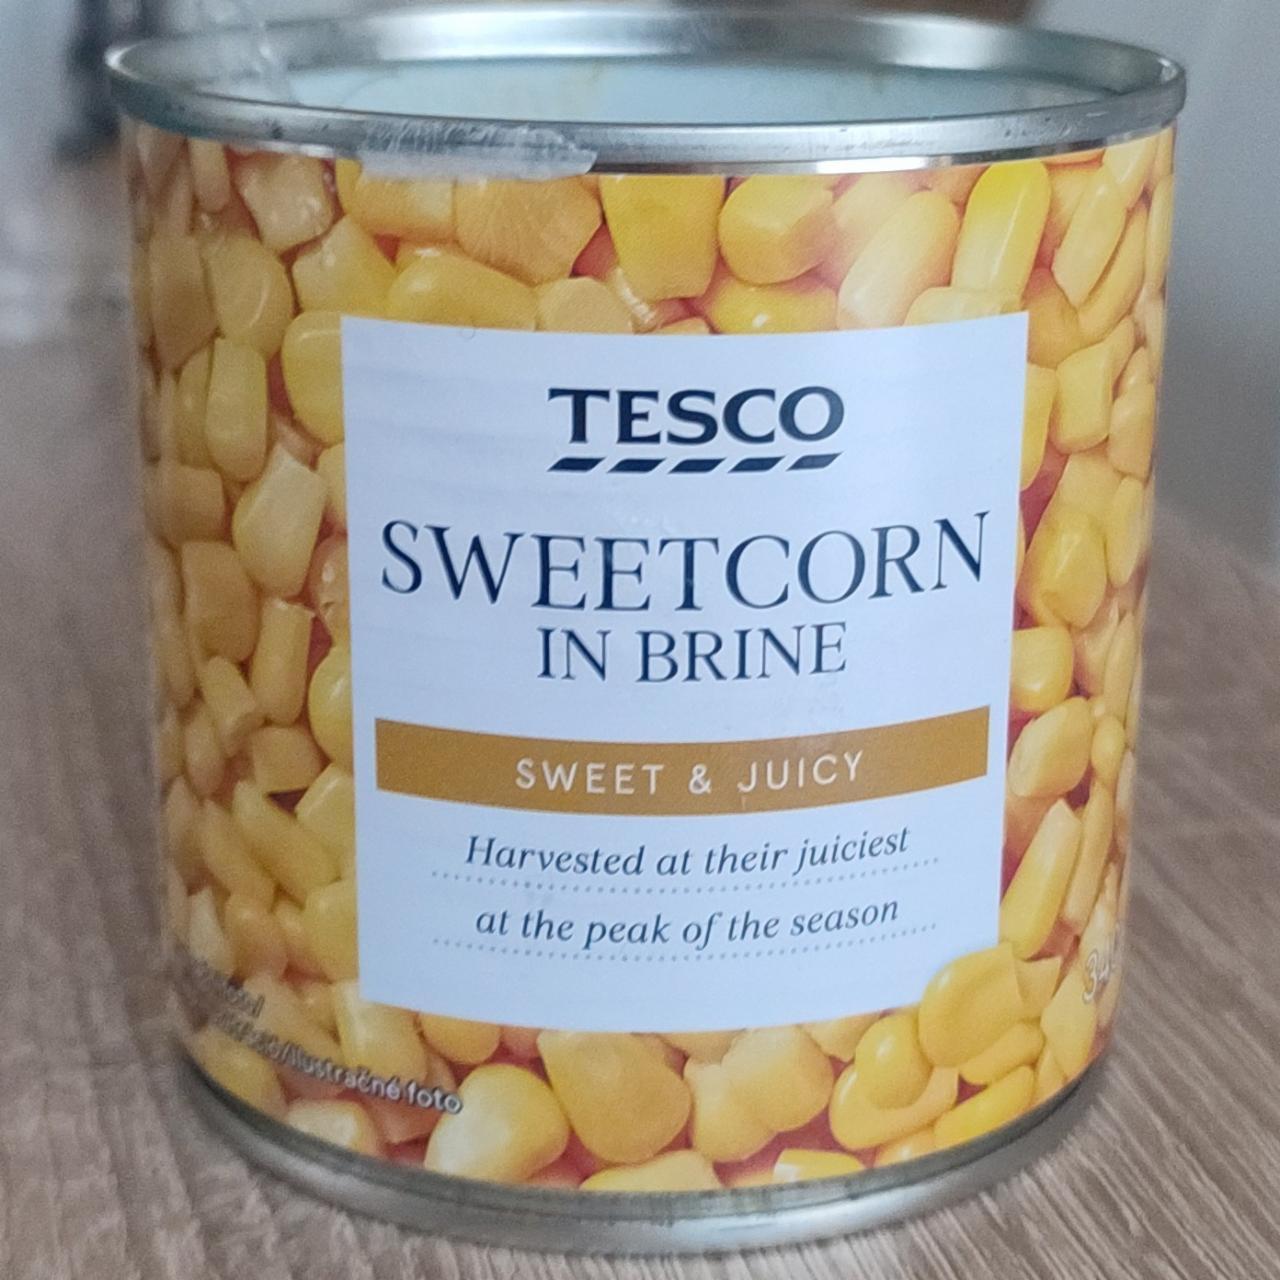 Képek - Sweetcorn in brine morzsolt csemegekukorica Tesco